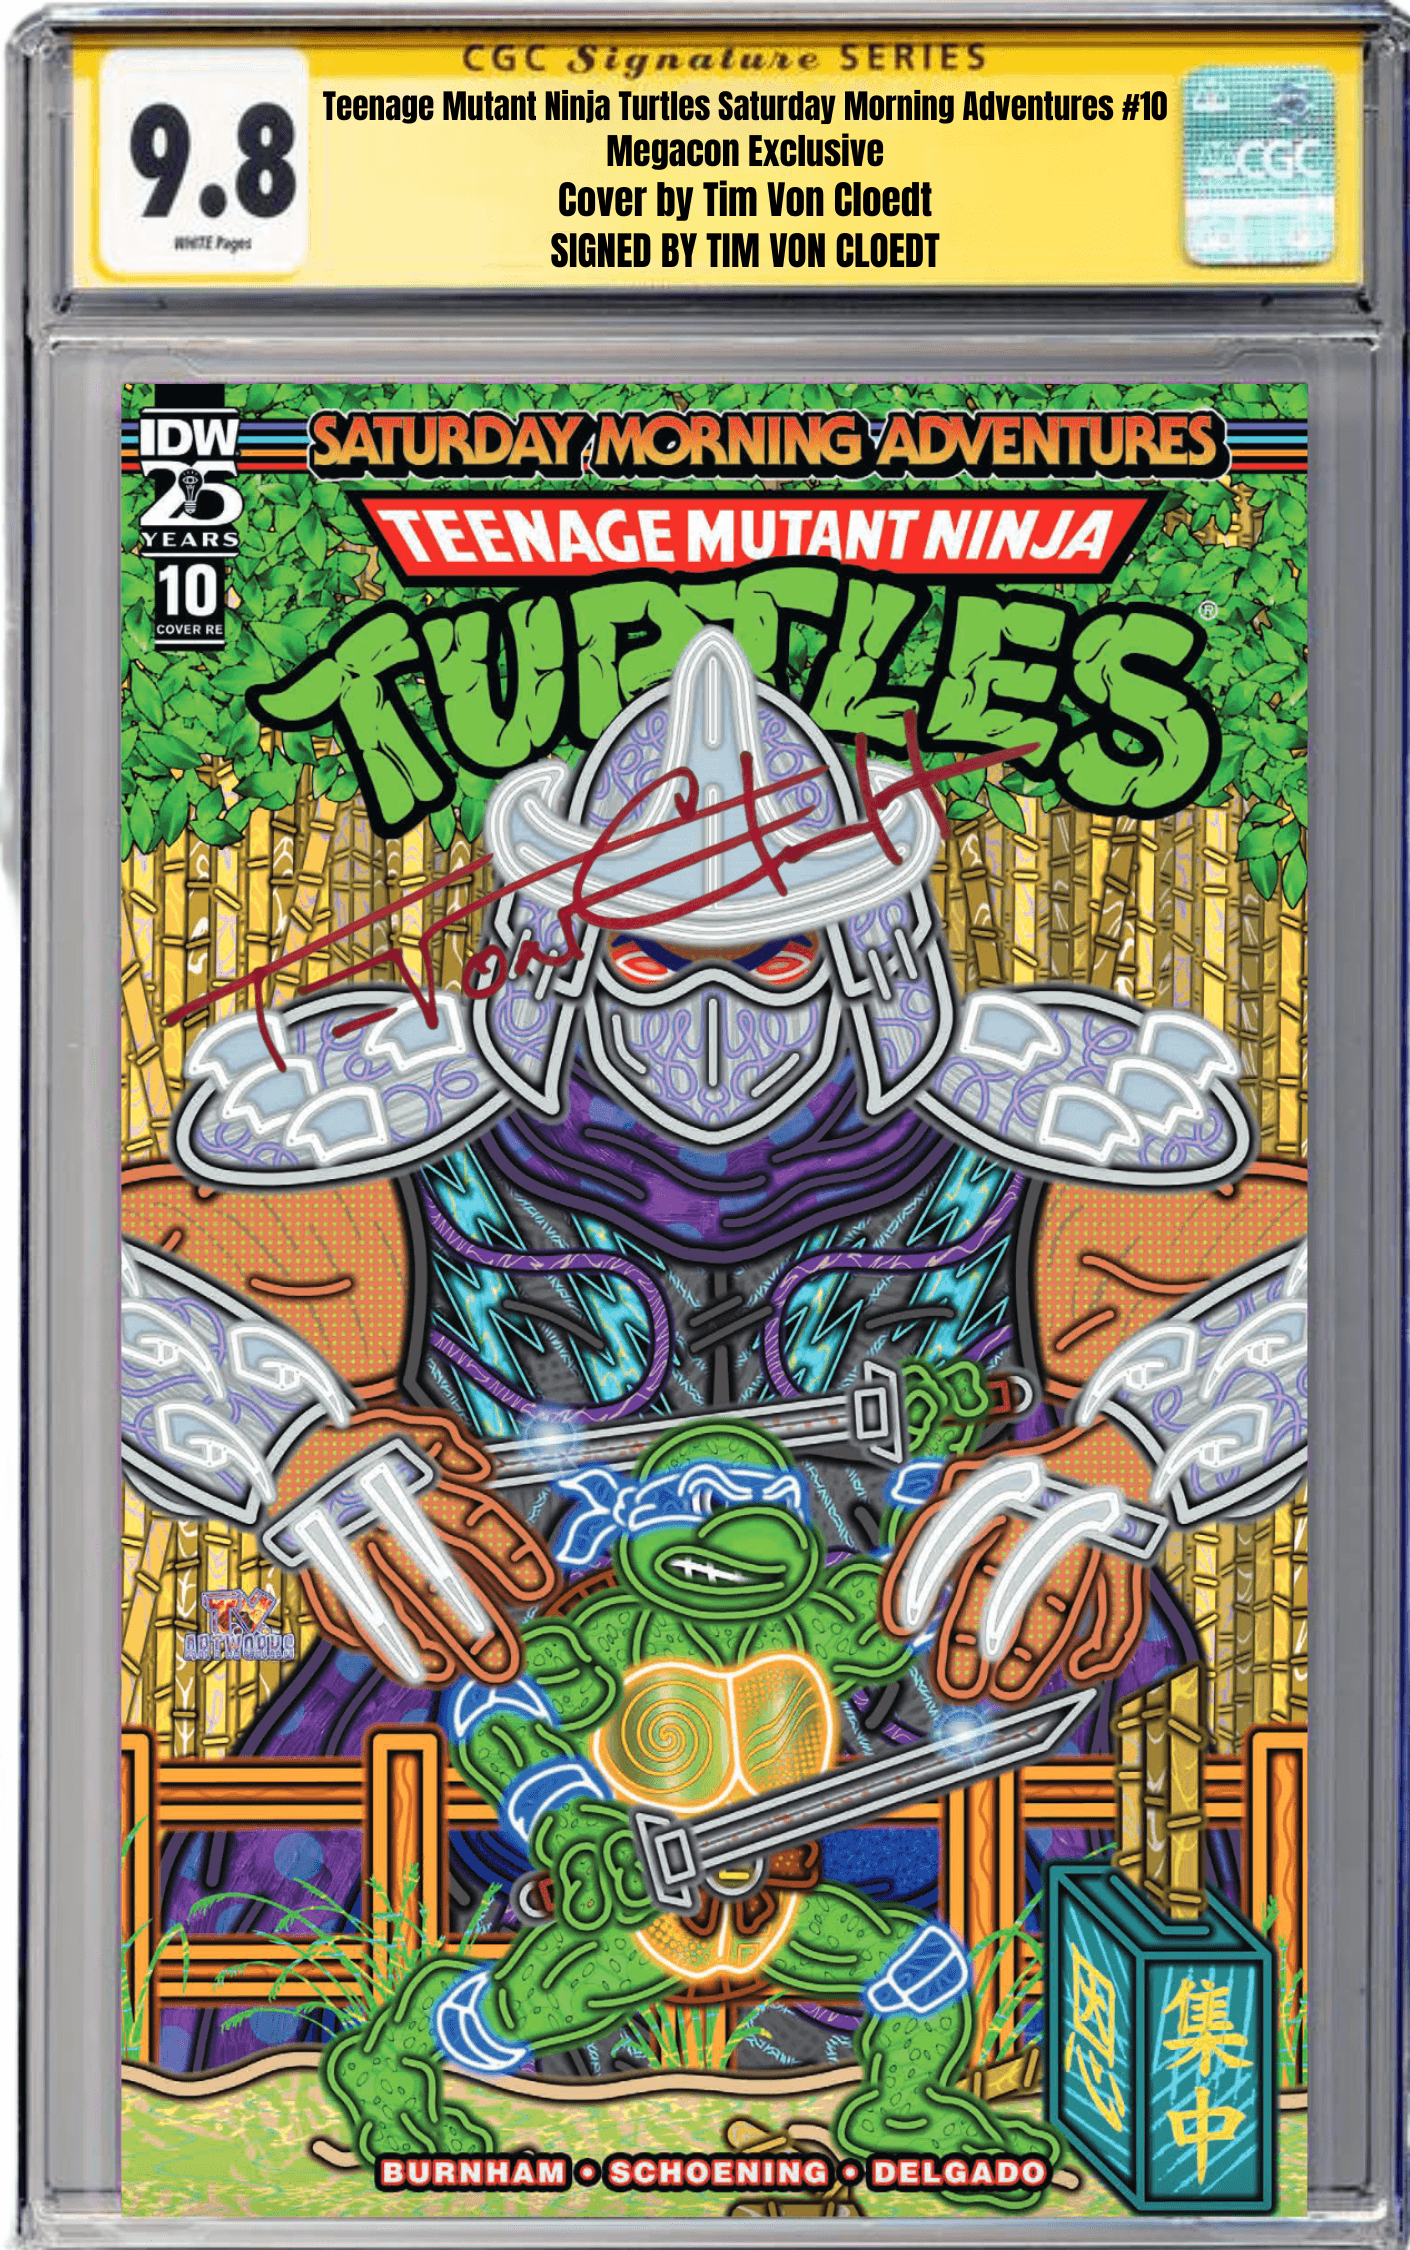 TEENAGE MUTANT NINJA TURTLES: SATURDAY MORNING ADVENTURES #10 MEGACON EXCLUSIVE - CGC 9.8 TRADE DRESS SIGNED BY TIM VON CLOEDT - Slab City Comics US